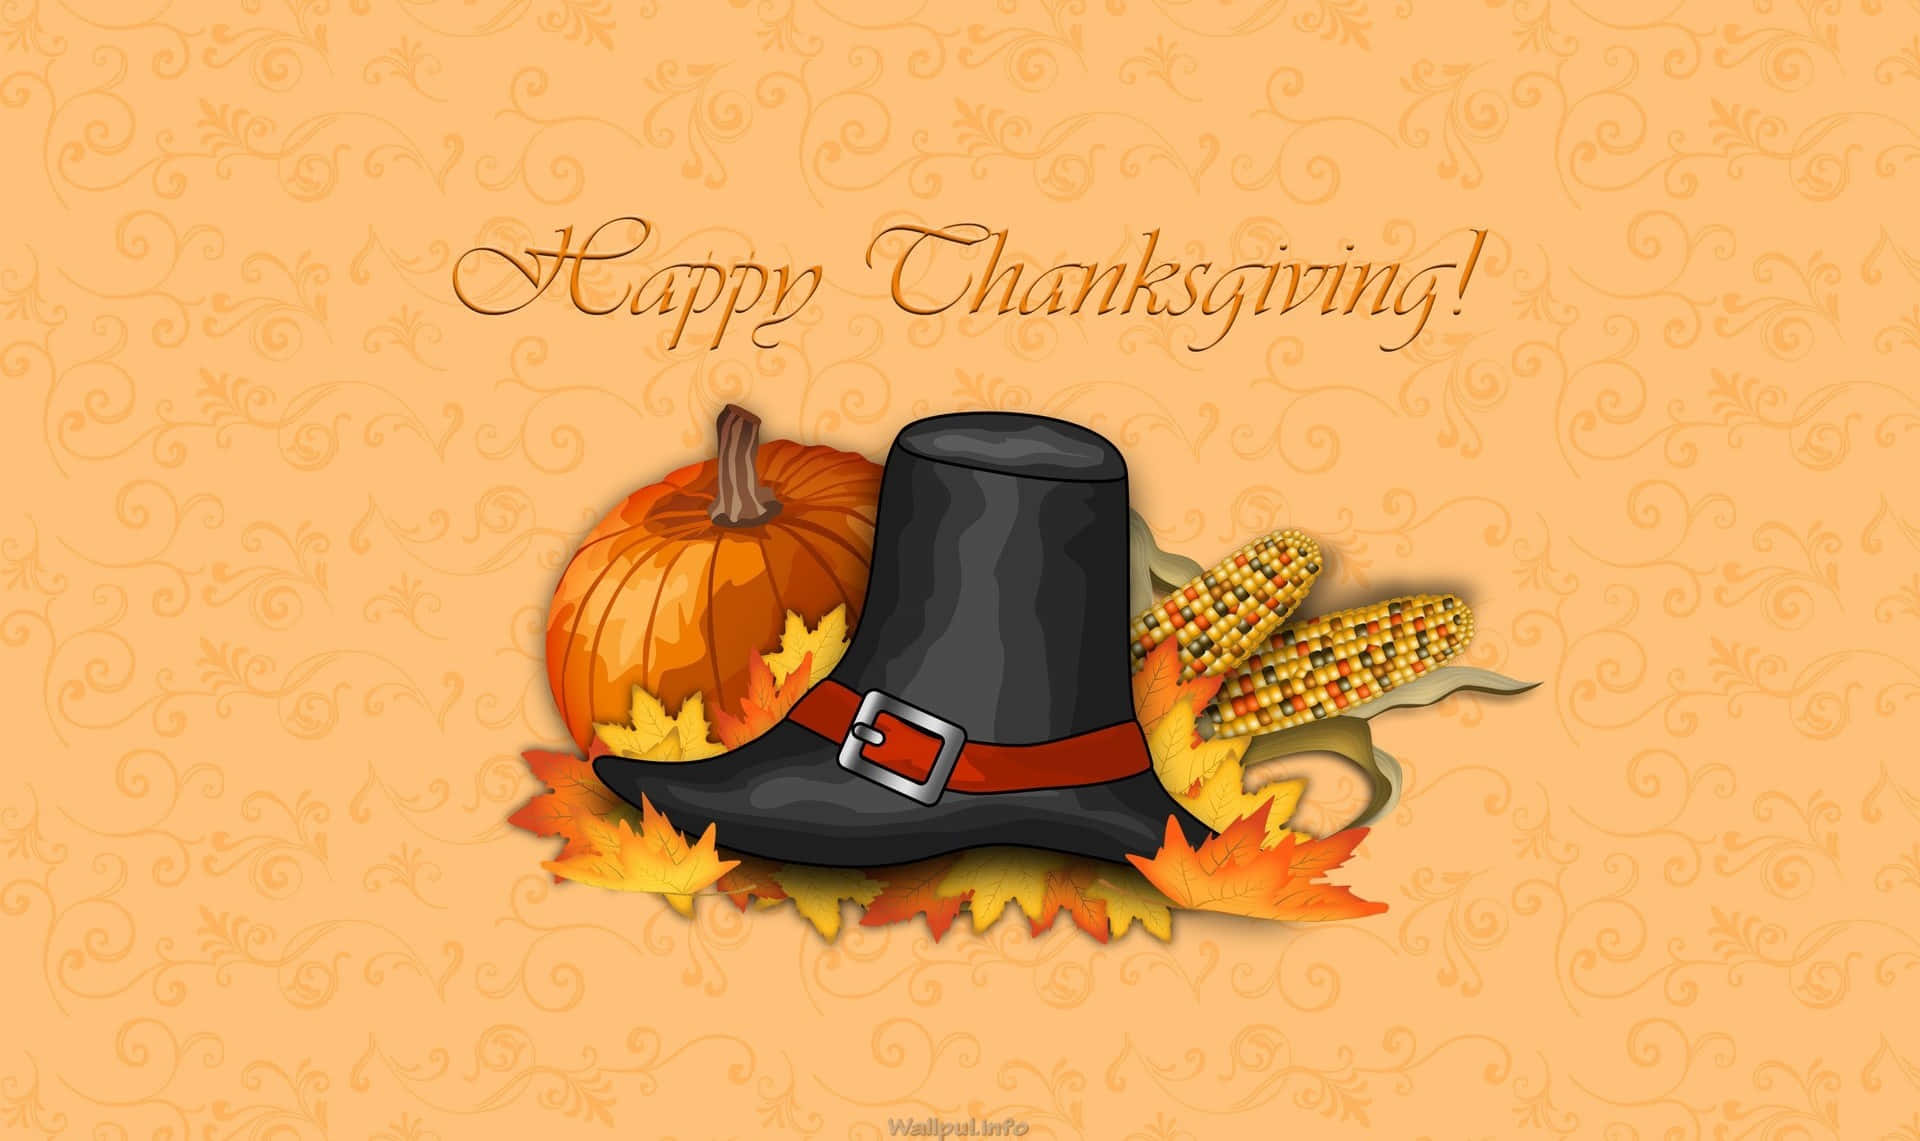 Wishing You a Happy Thanksgiving Wallpaper